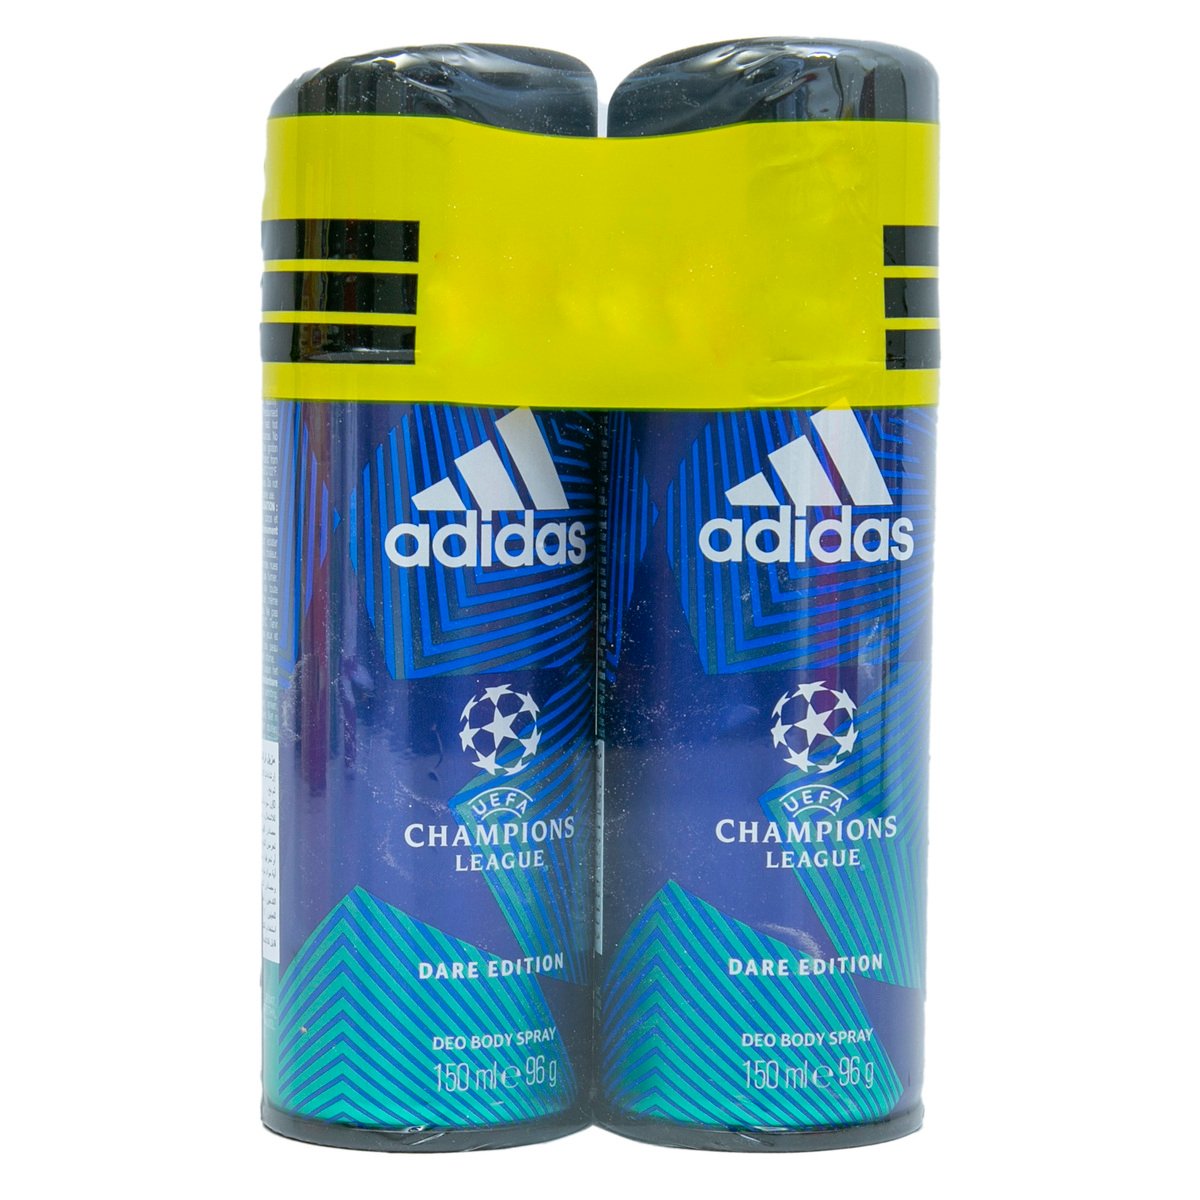 Adidas Dare Edition Champions League Deo Body Spray For Men 2 x 150 ml